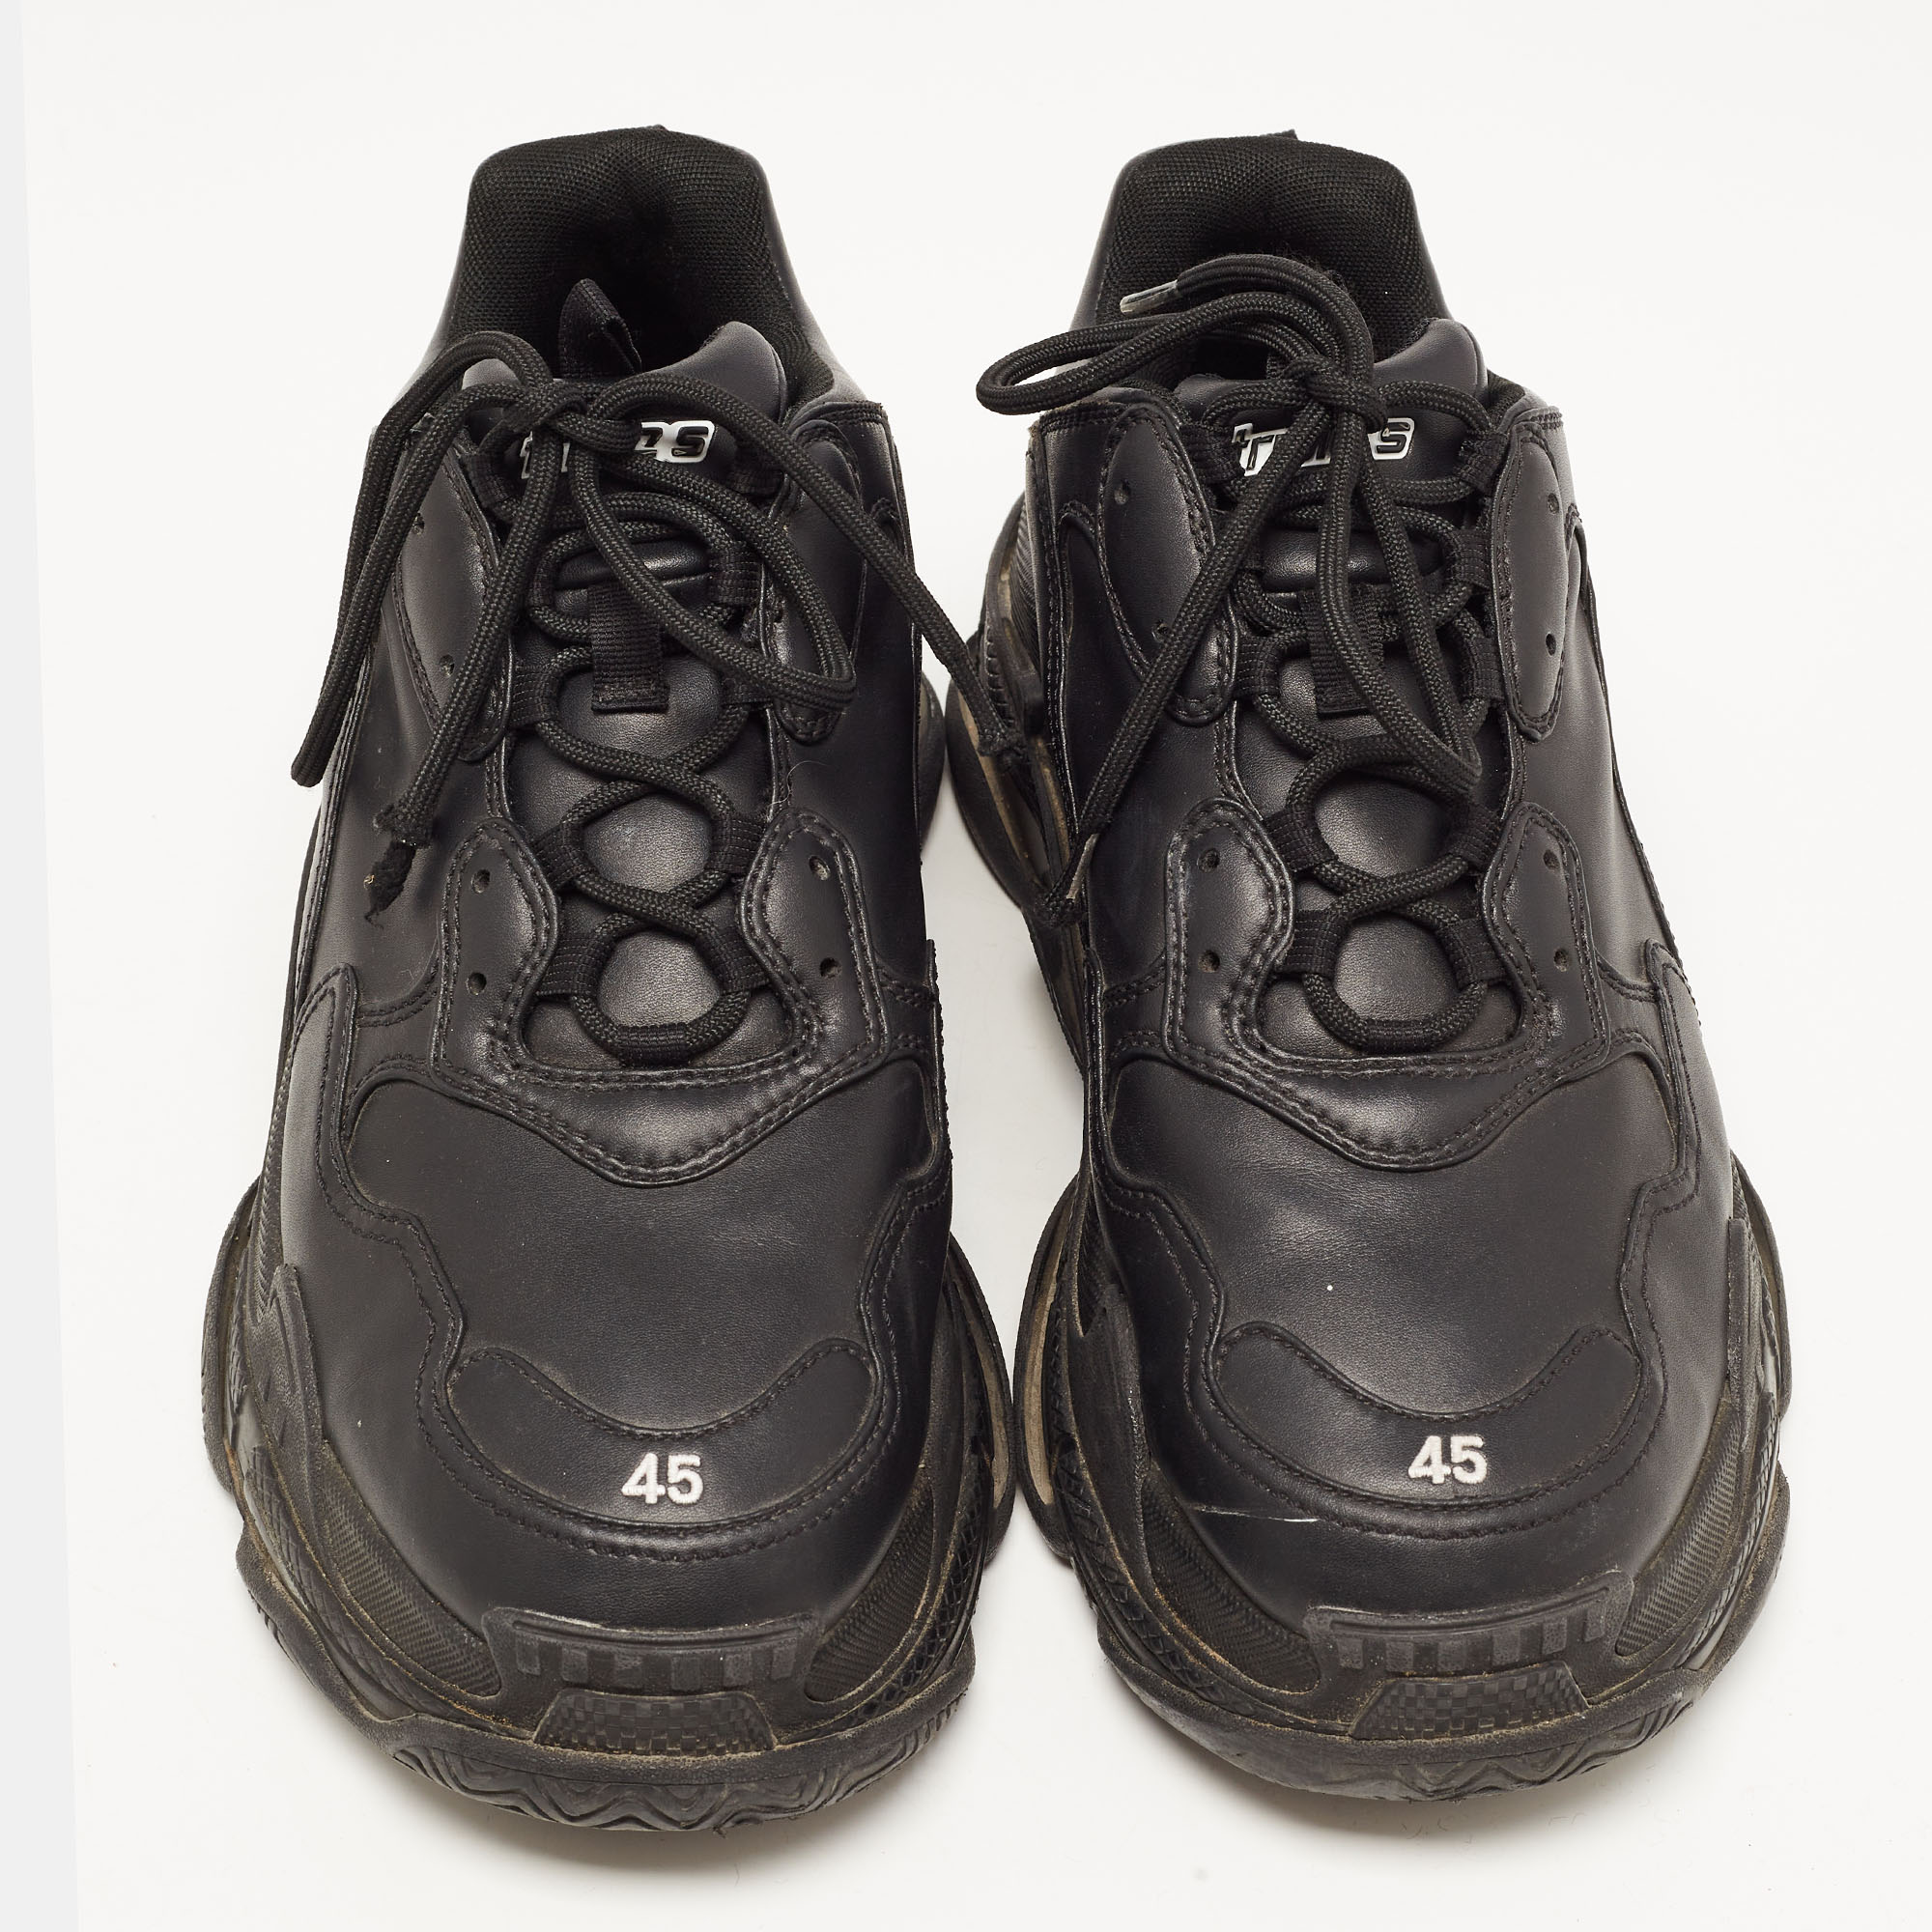 Balenciaga Black Leather Triple S Sneakers Size 45